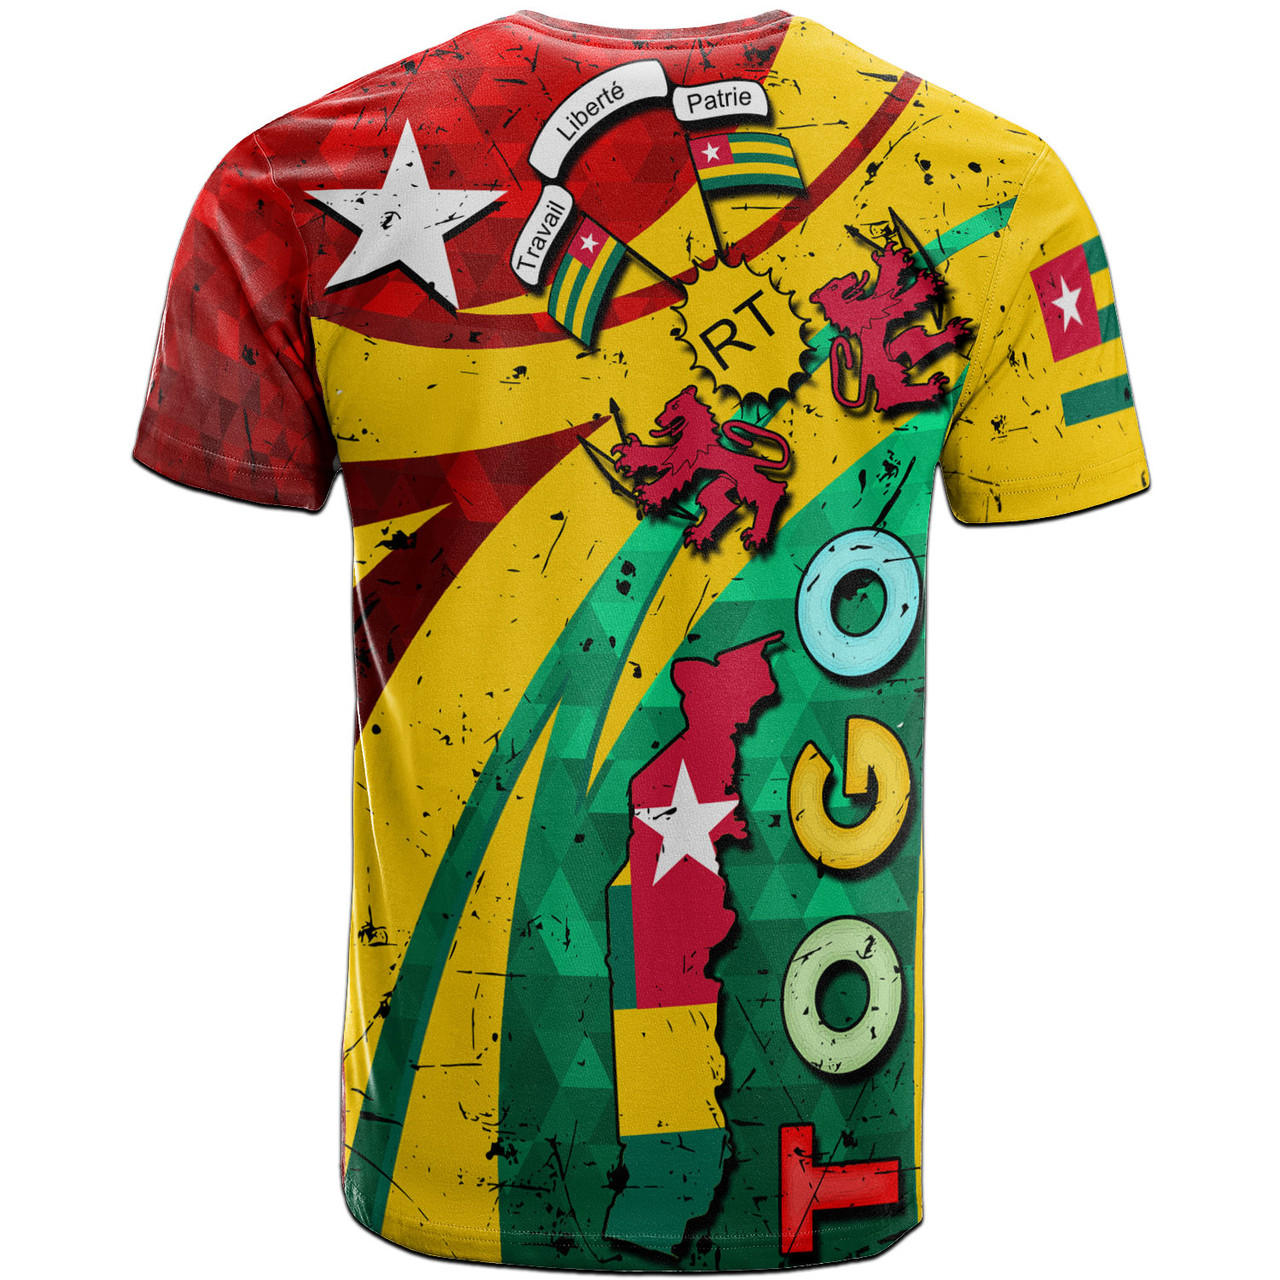 Togo T-Shirt - Togo Pride Style T-Shirt Desert Fashion 2